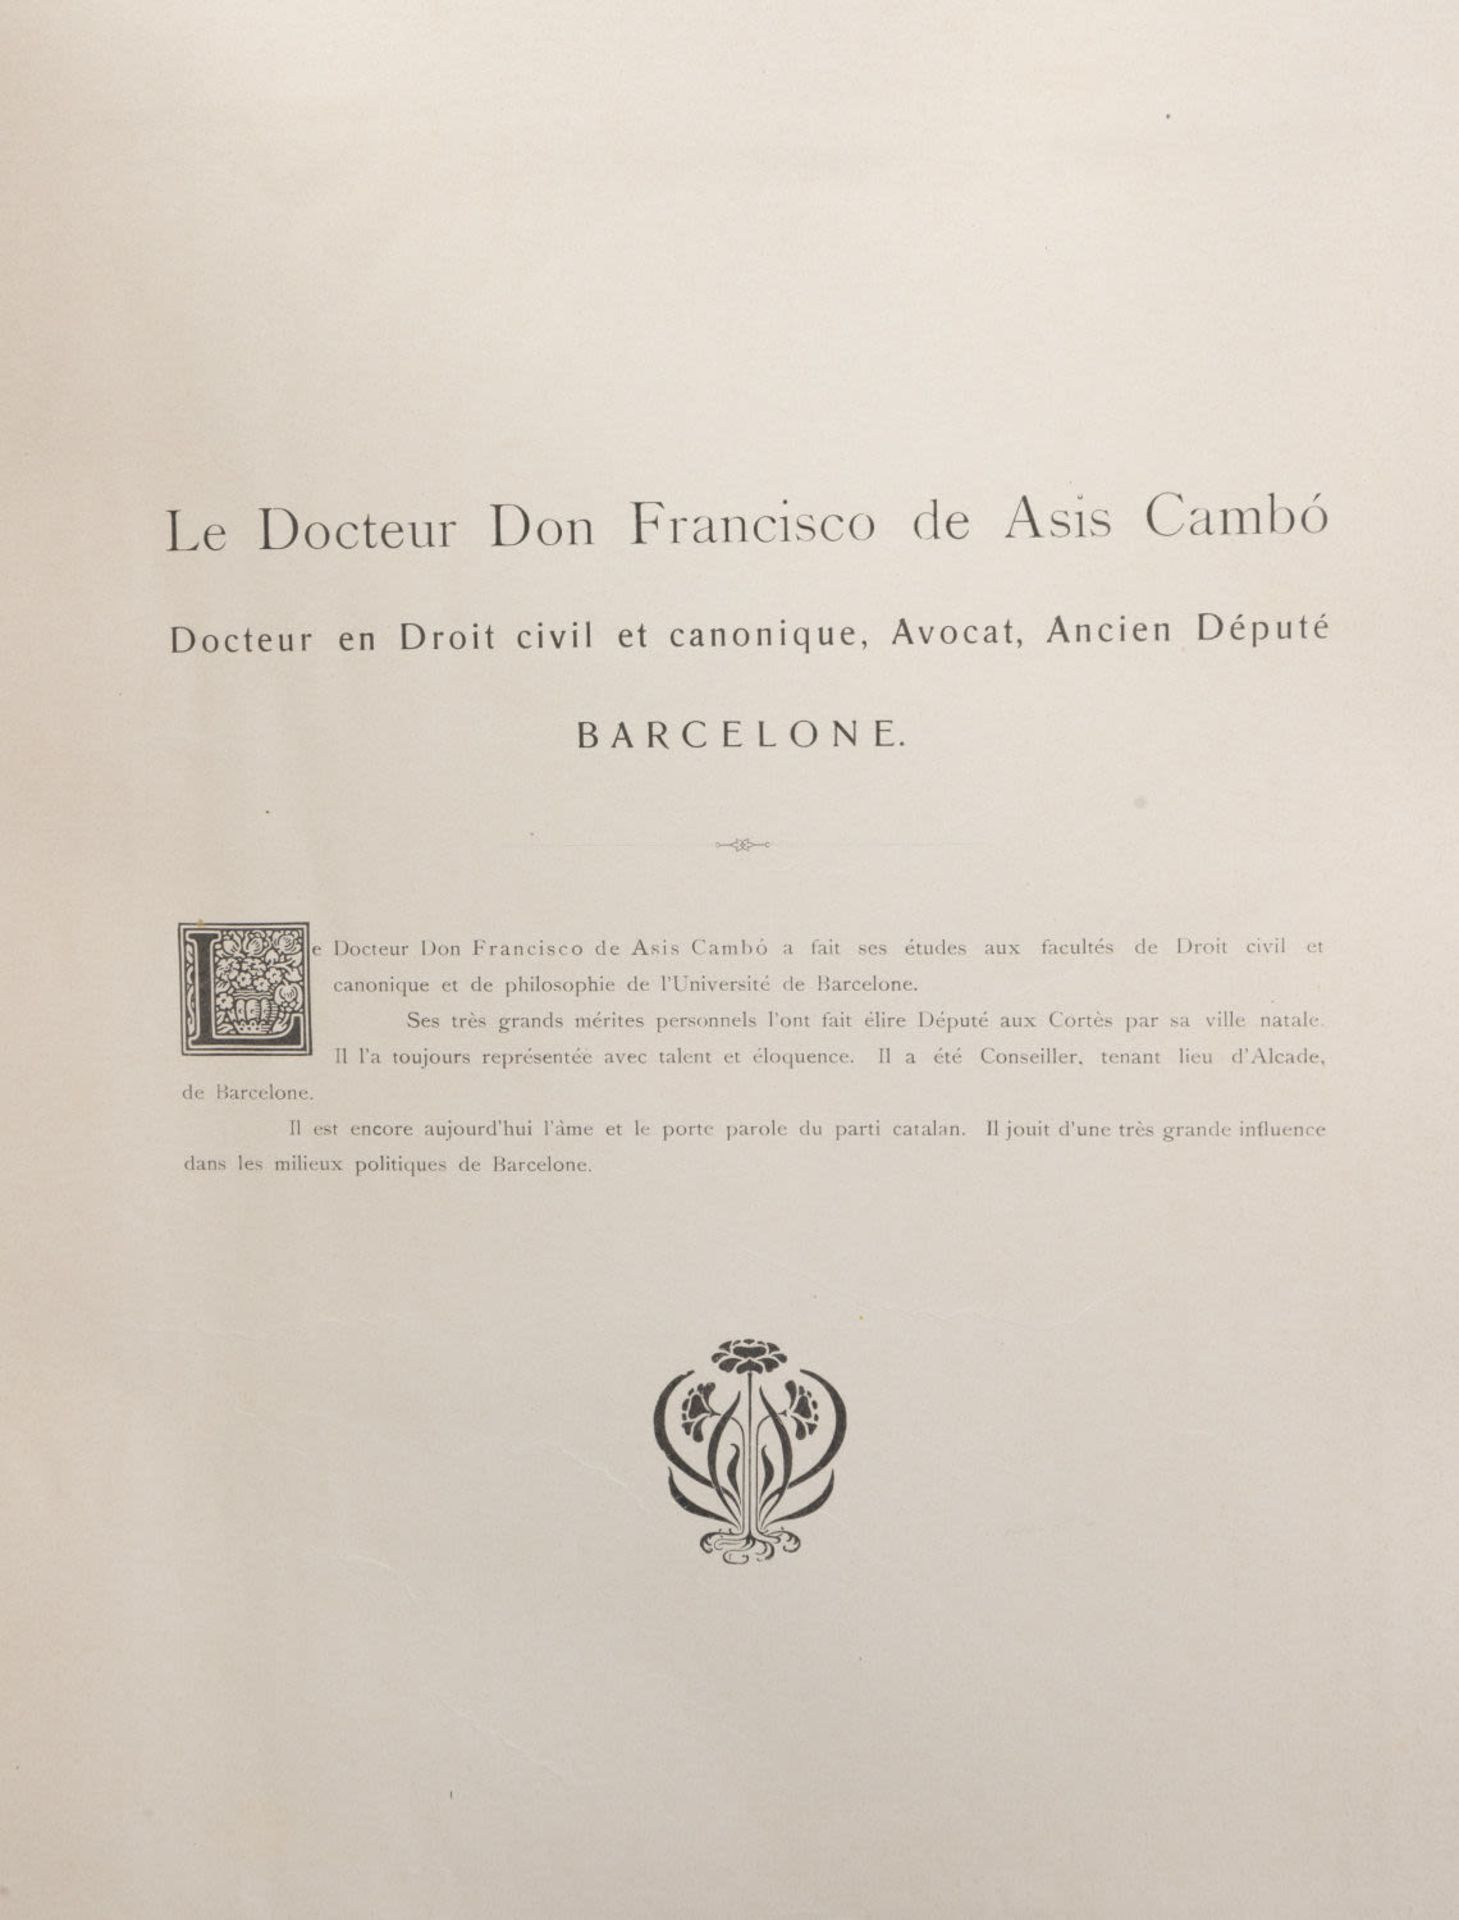 Book "l'Espagne Contemporaine", 19th century - Image 5 of 8